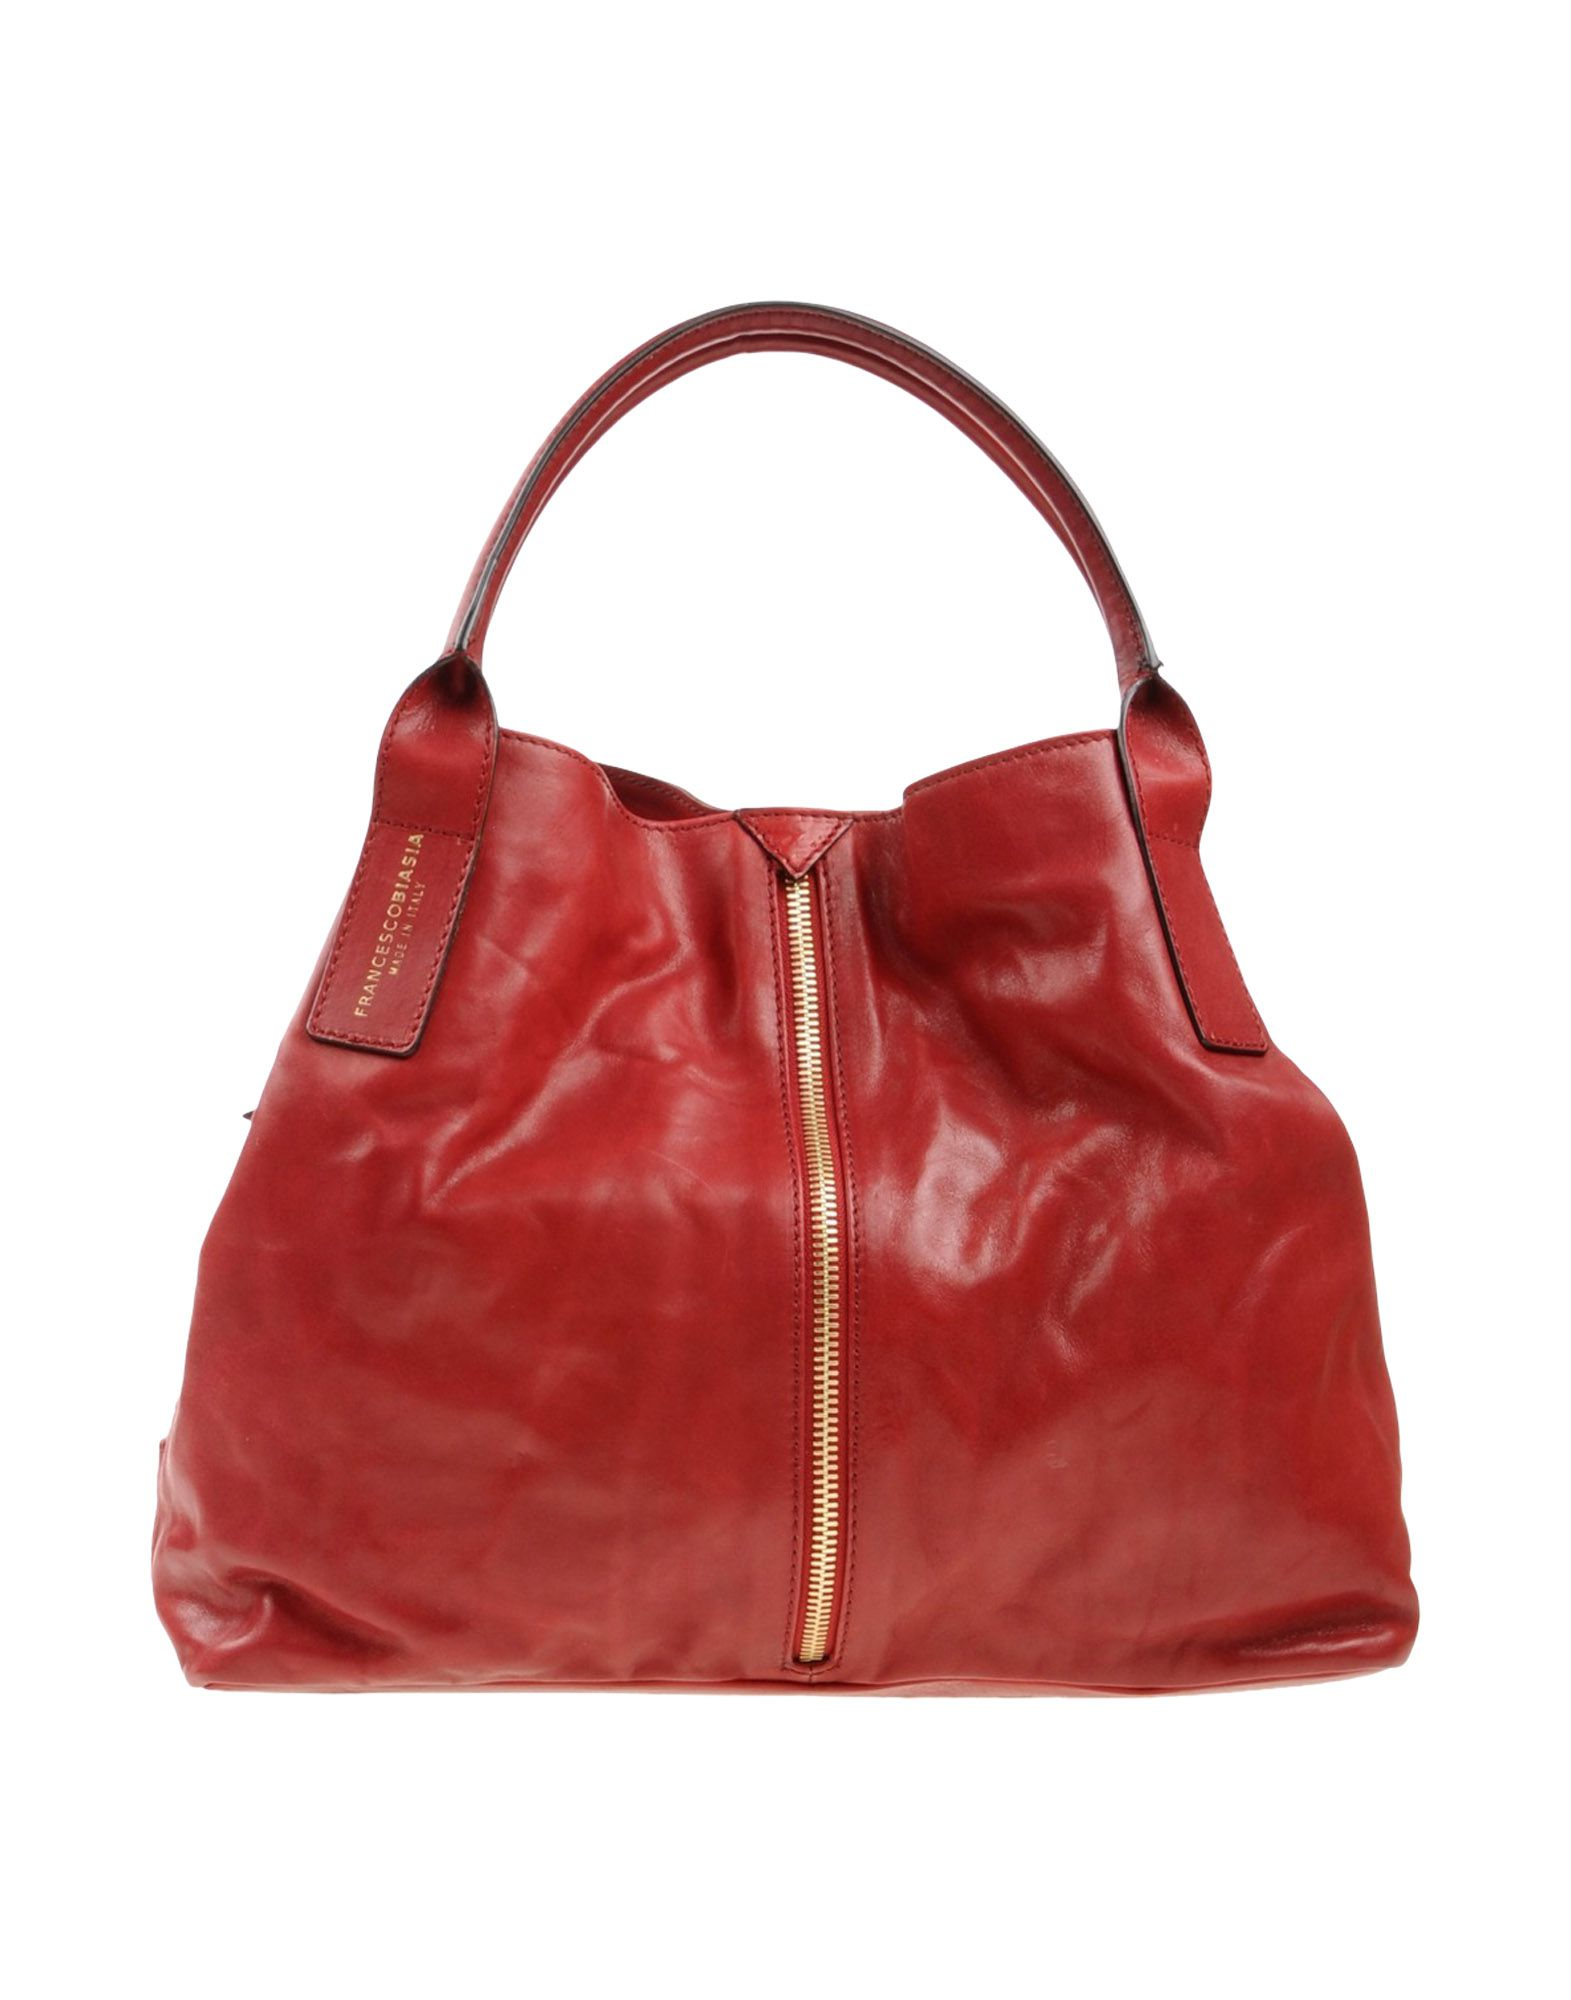 Lyst - Francesco Biasia Handbag in Red